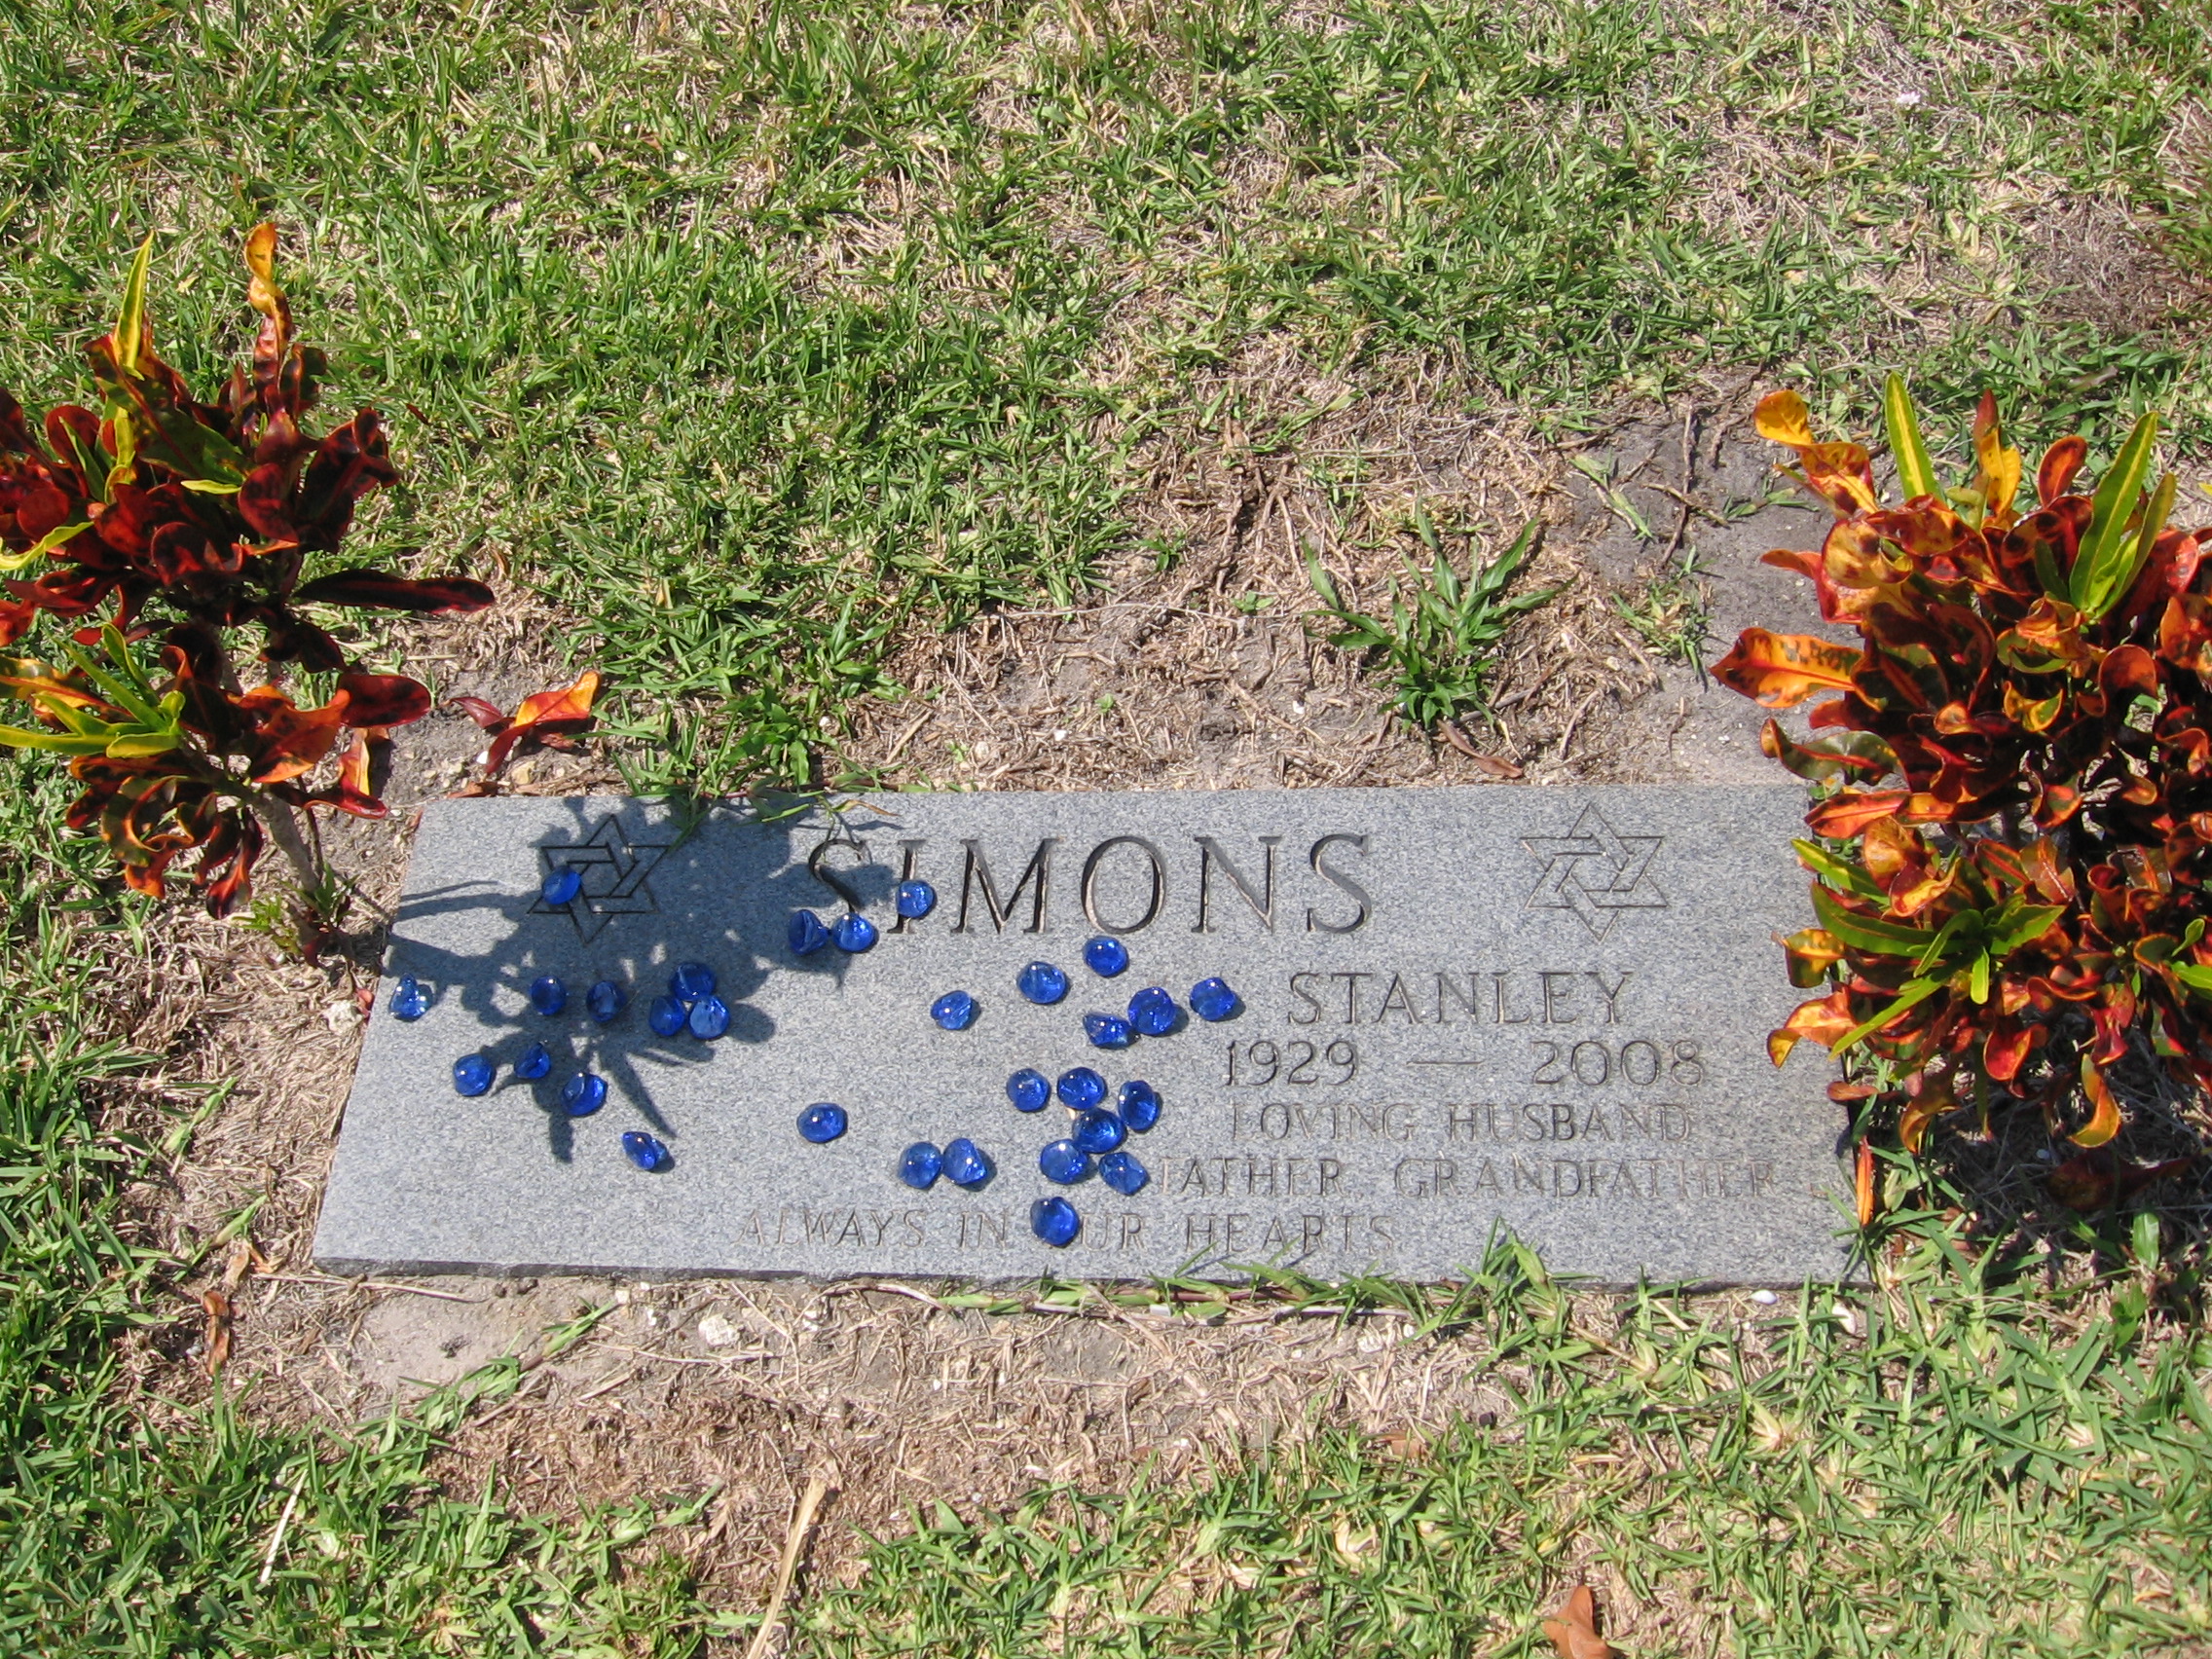 Stanley Simons